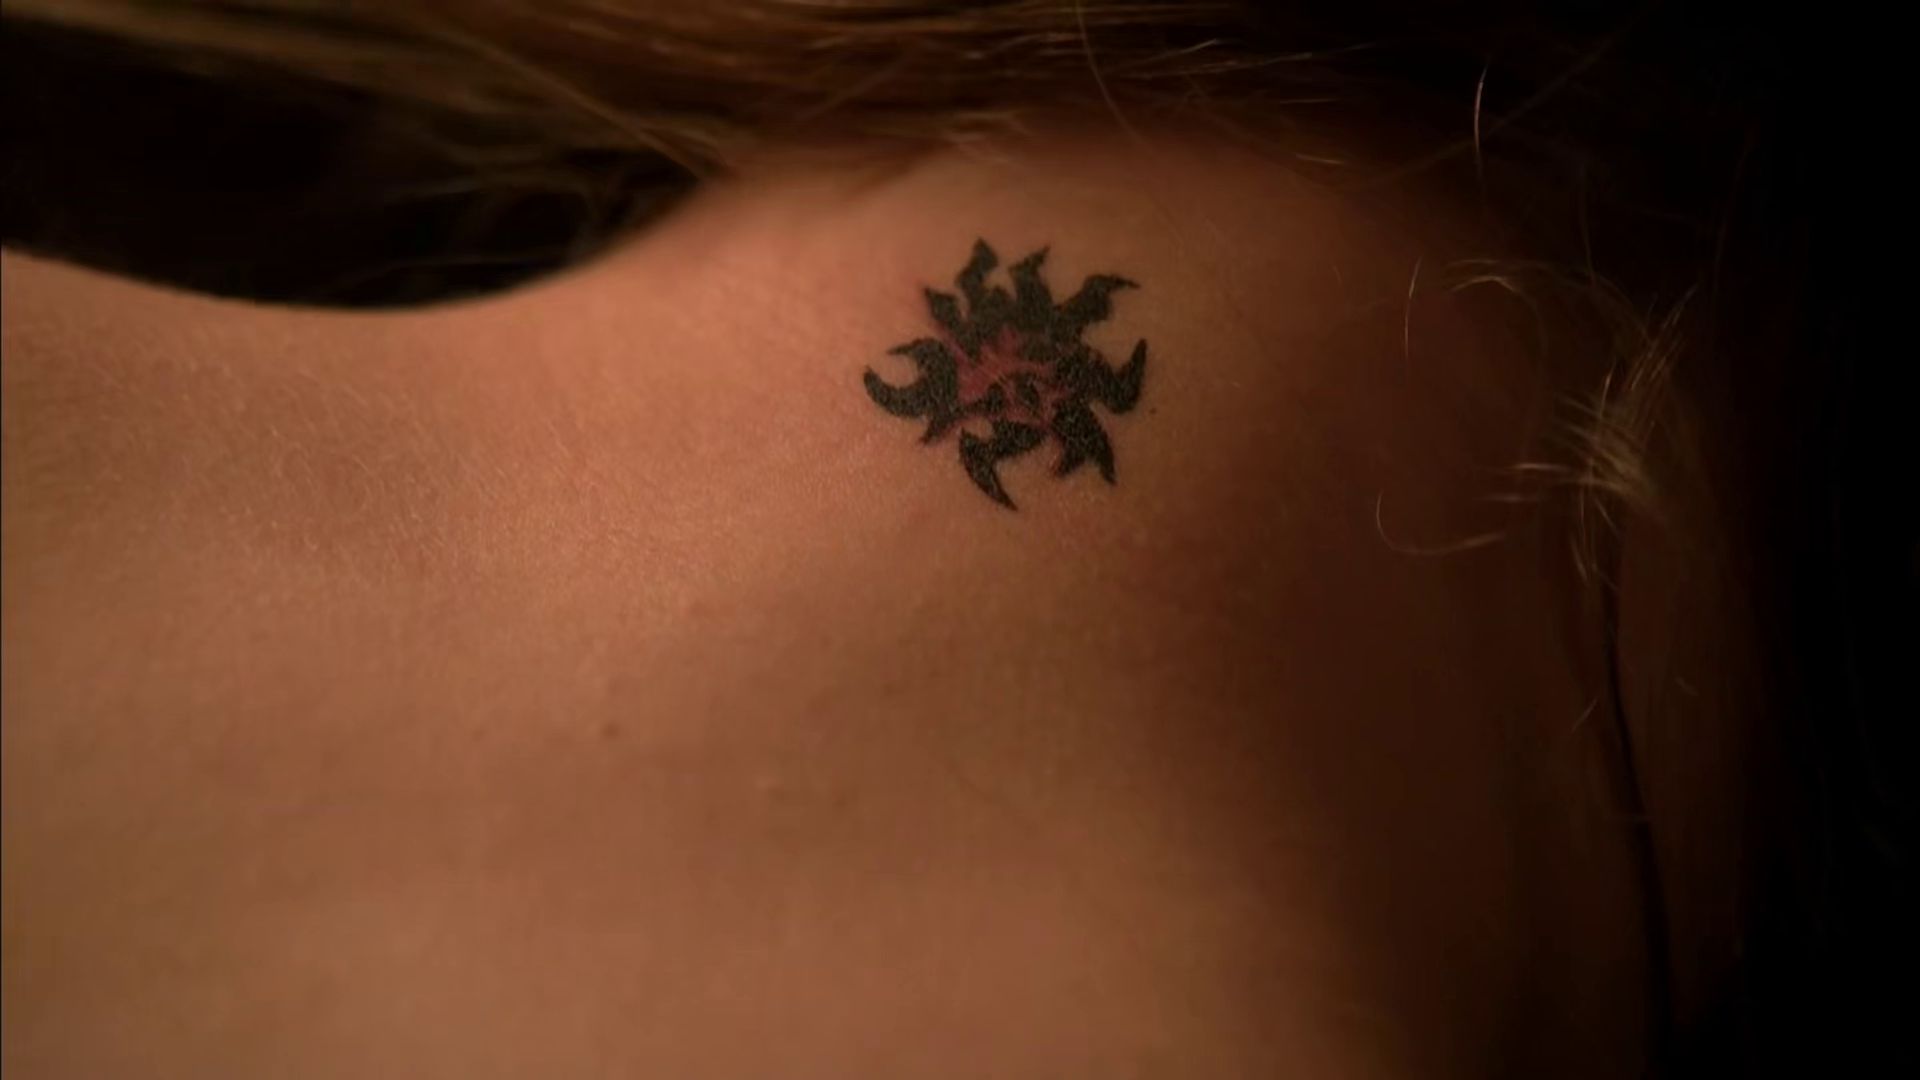 Connection: Fauxlivia's tattoo